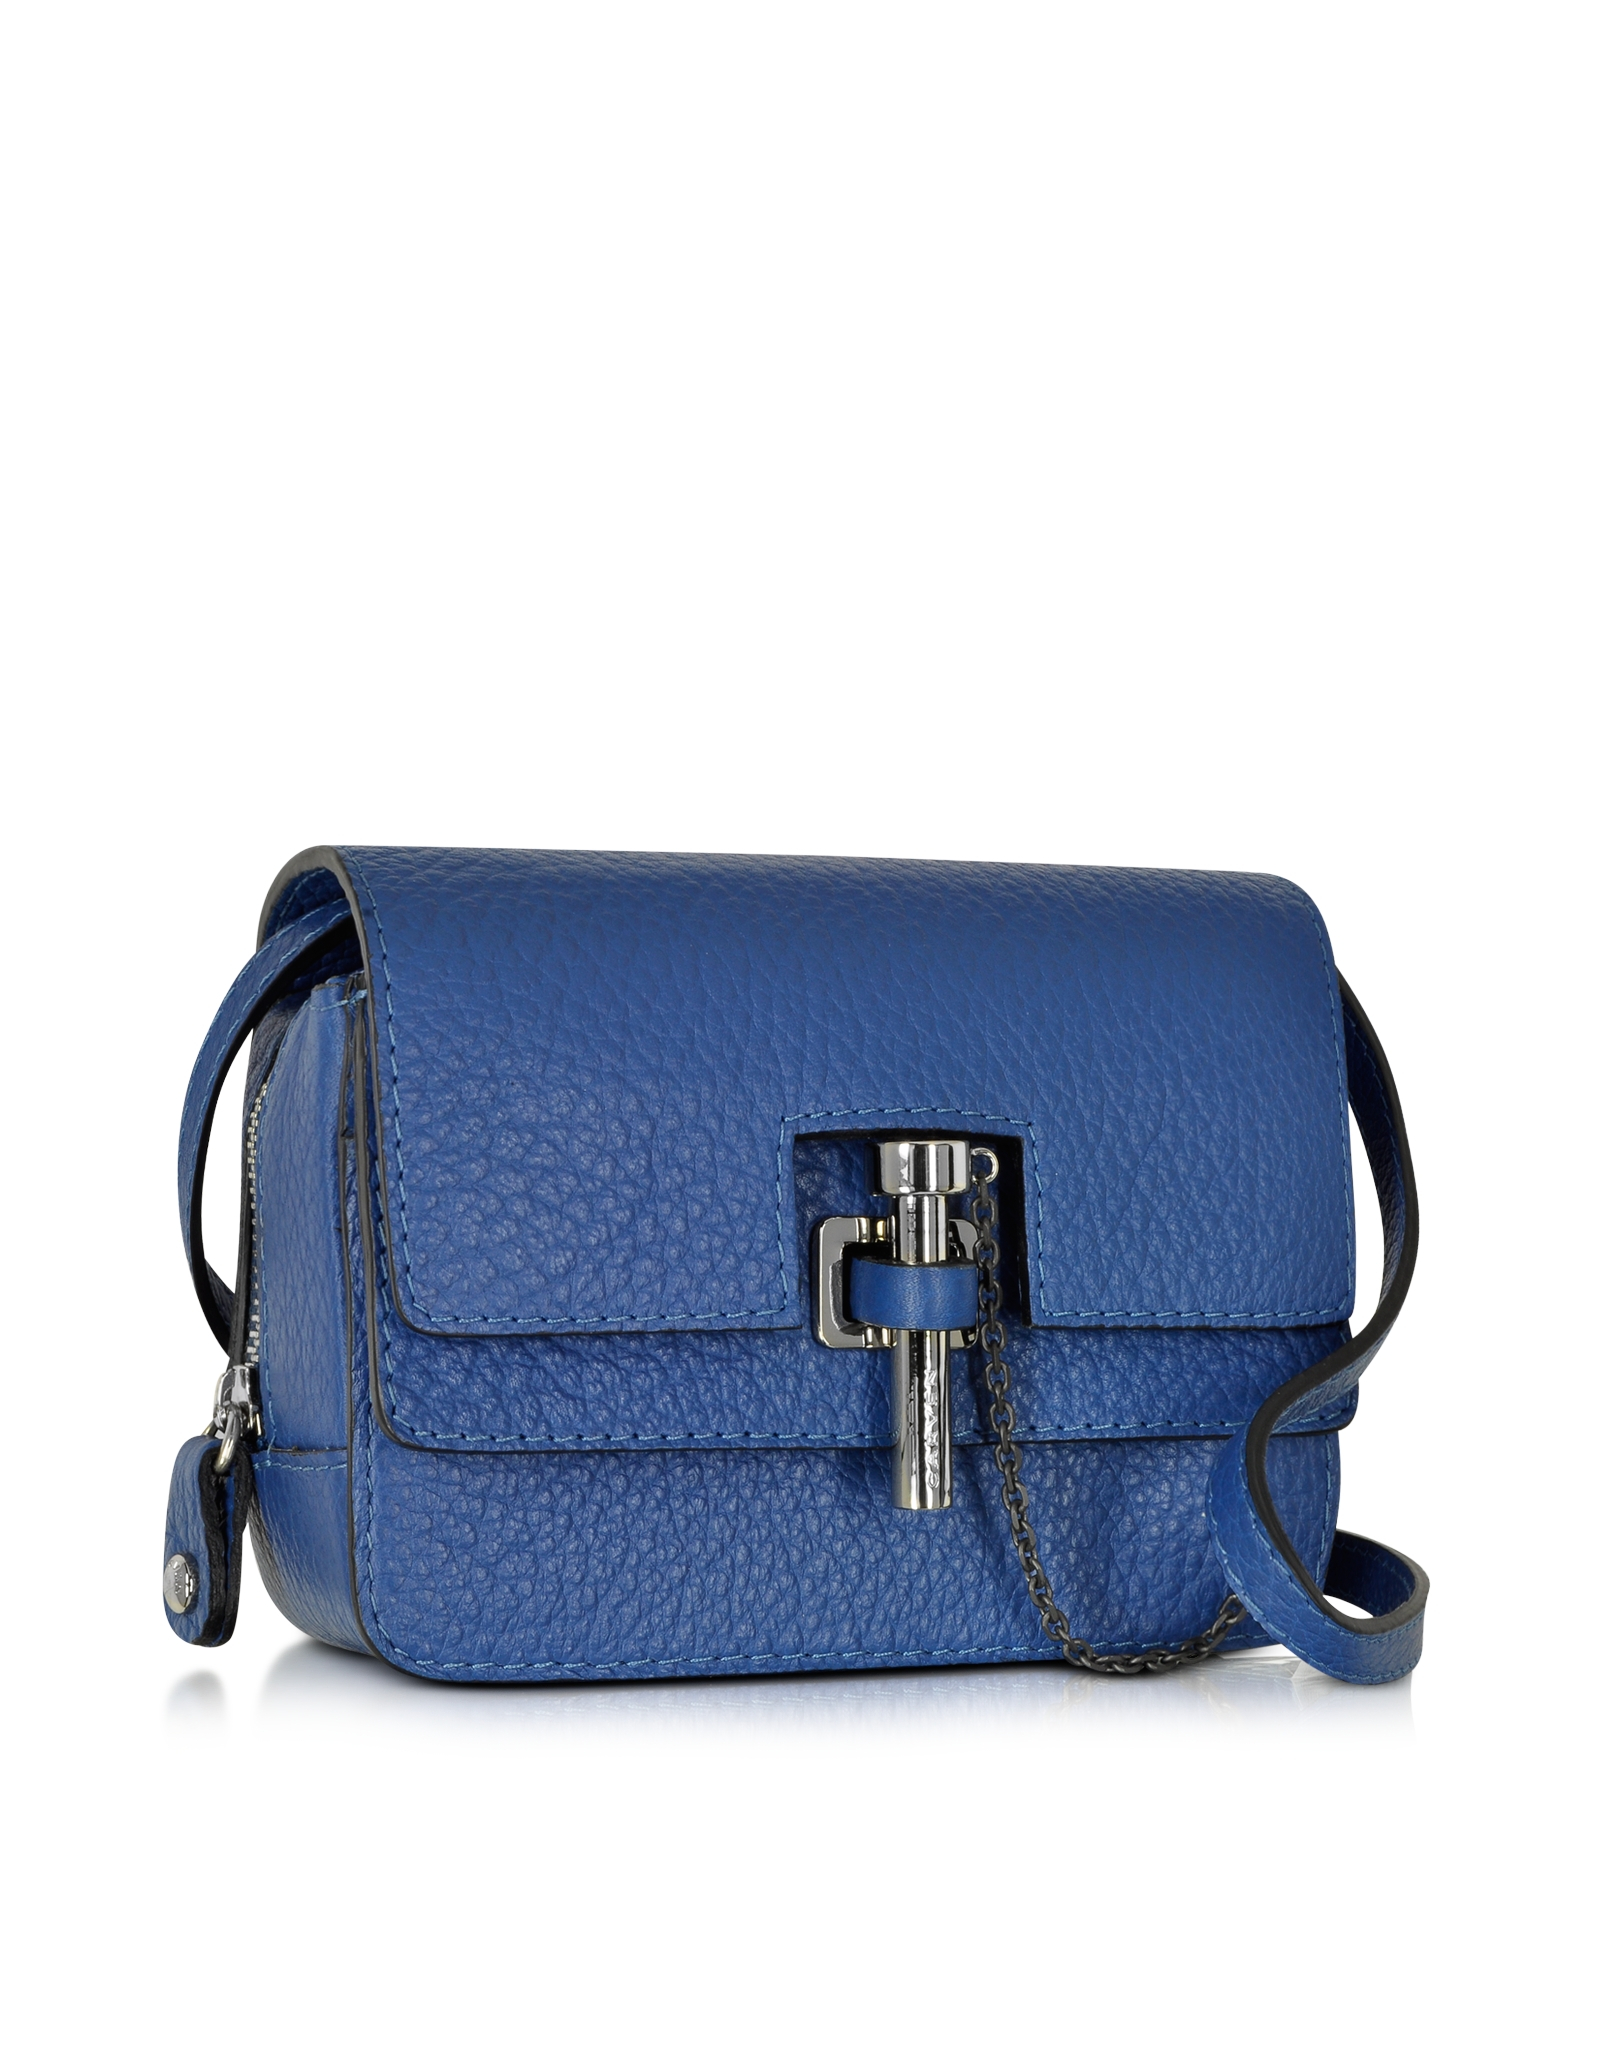 Lyst - Carven Malher Grained Leather Mini Crossbody Bag in Blue